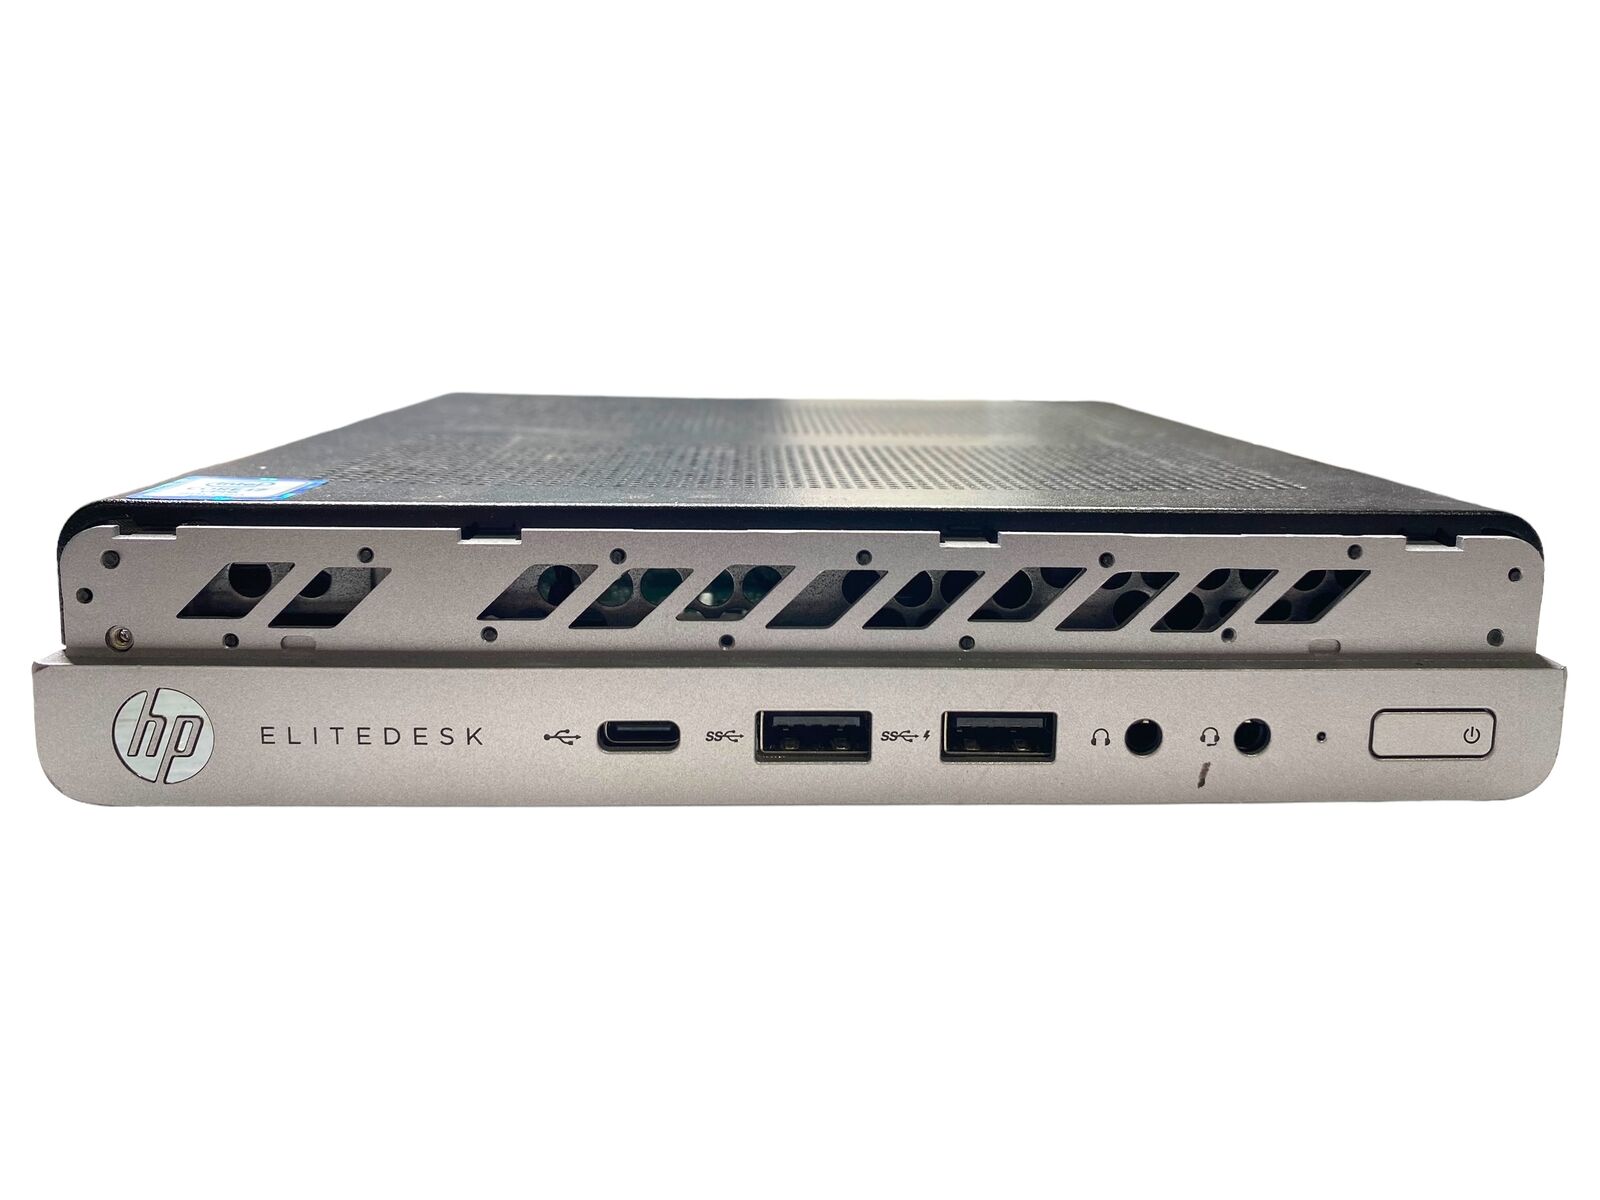 HP EliteDesk 800 G4 I7-8700 3.20GHz 256GB SSD 8GB RAM Desktop PC